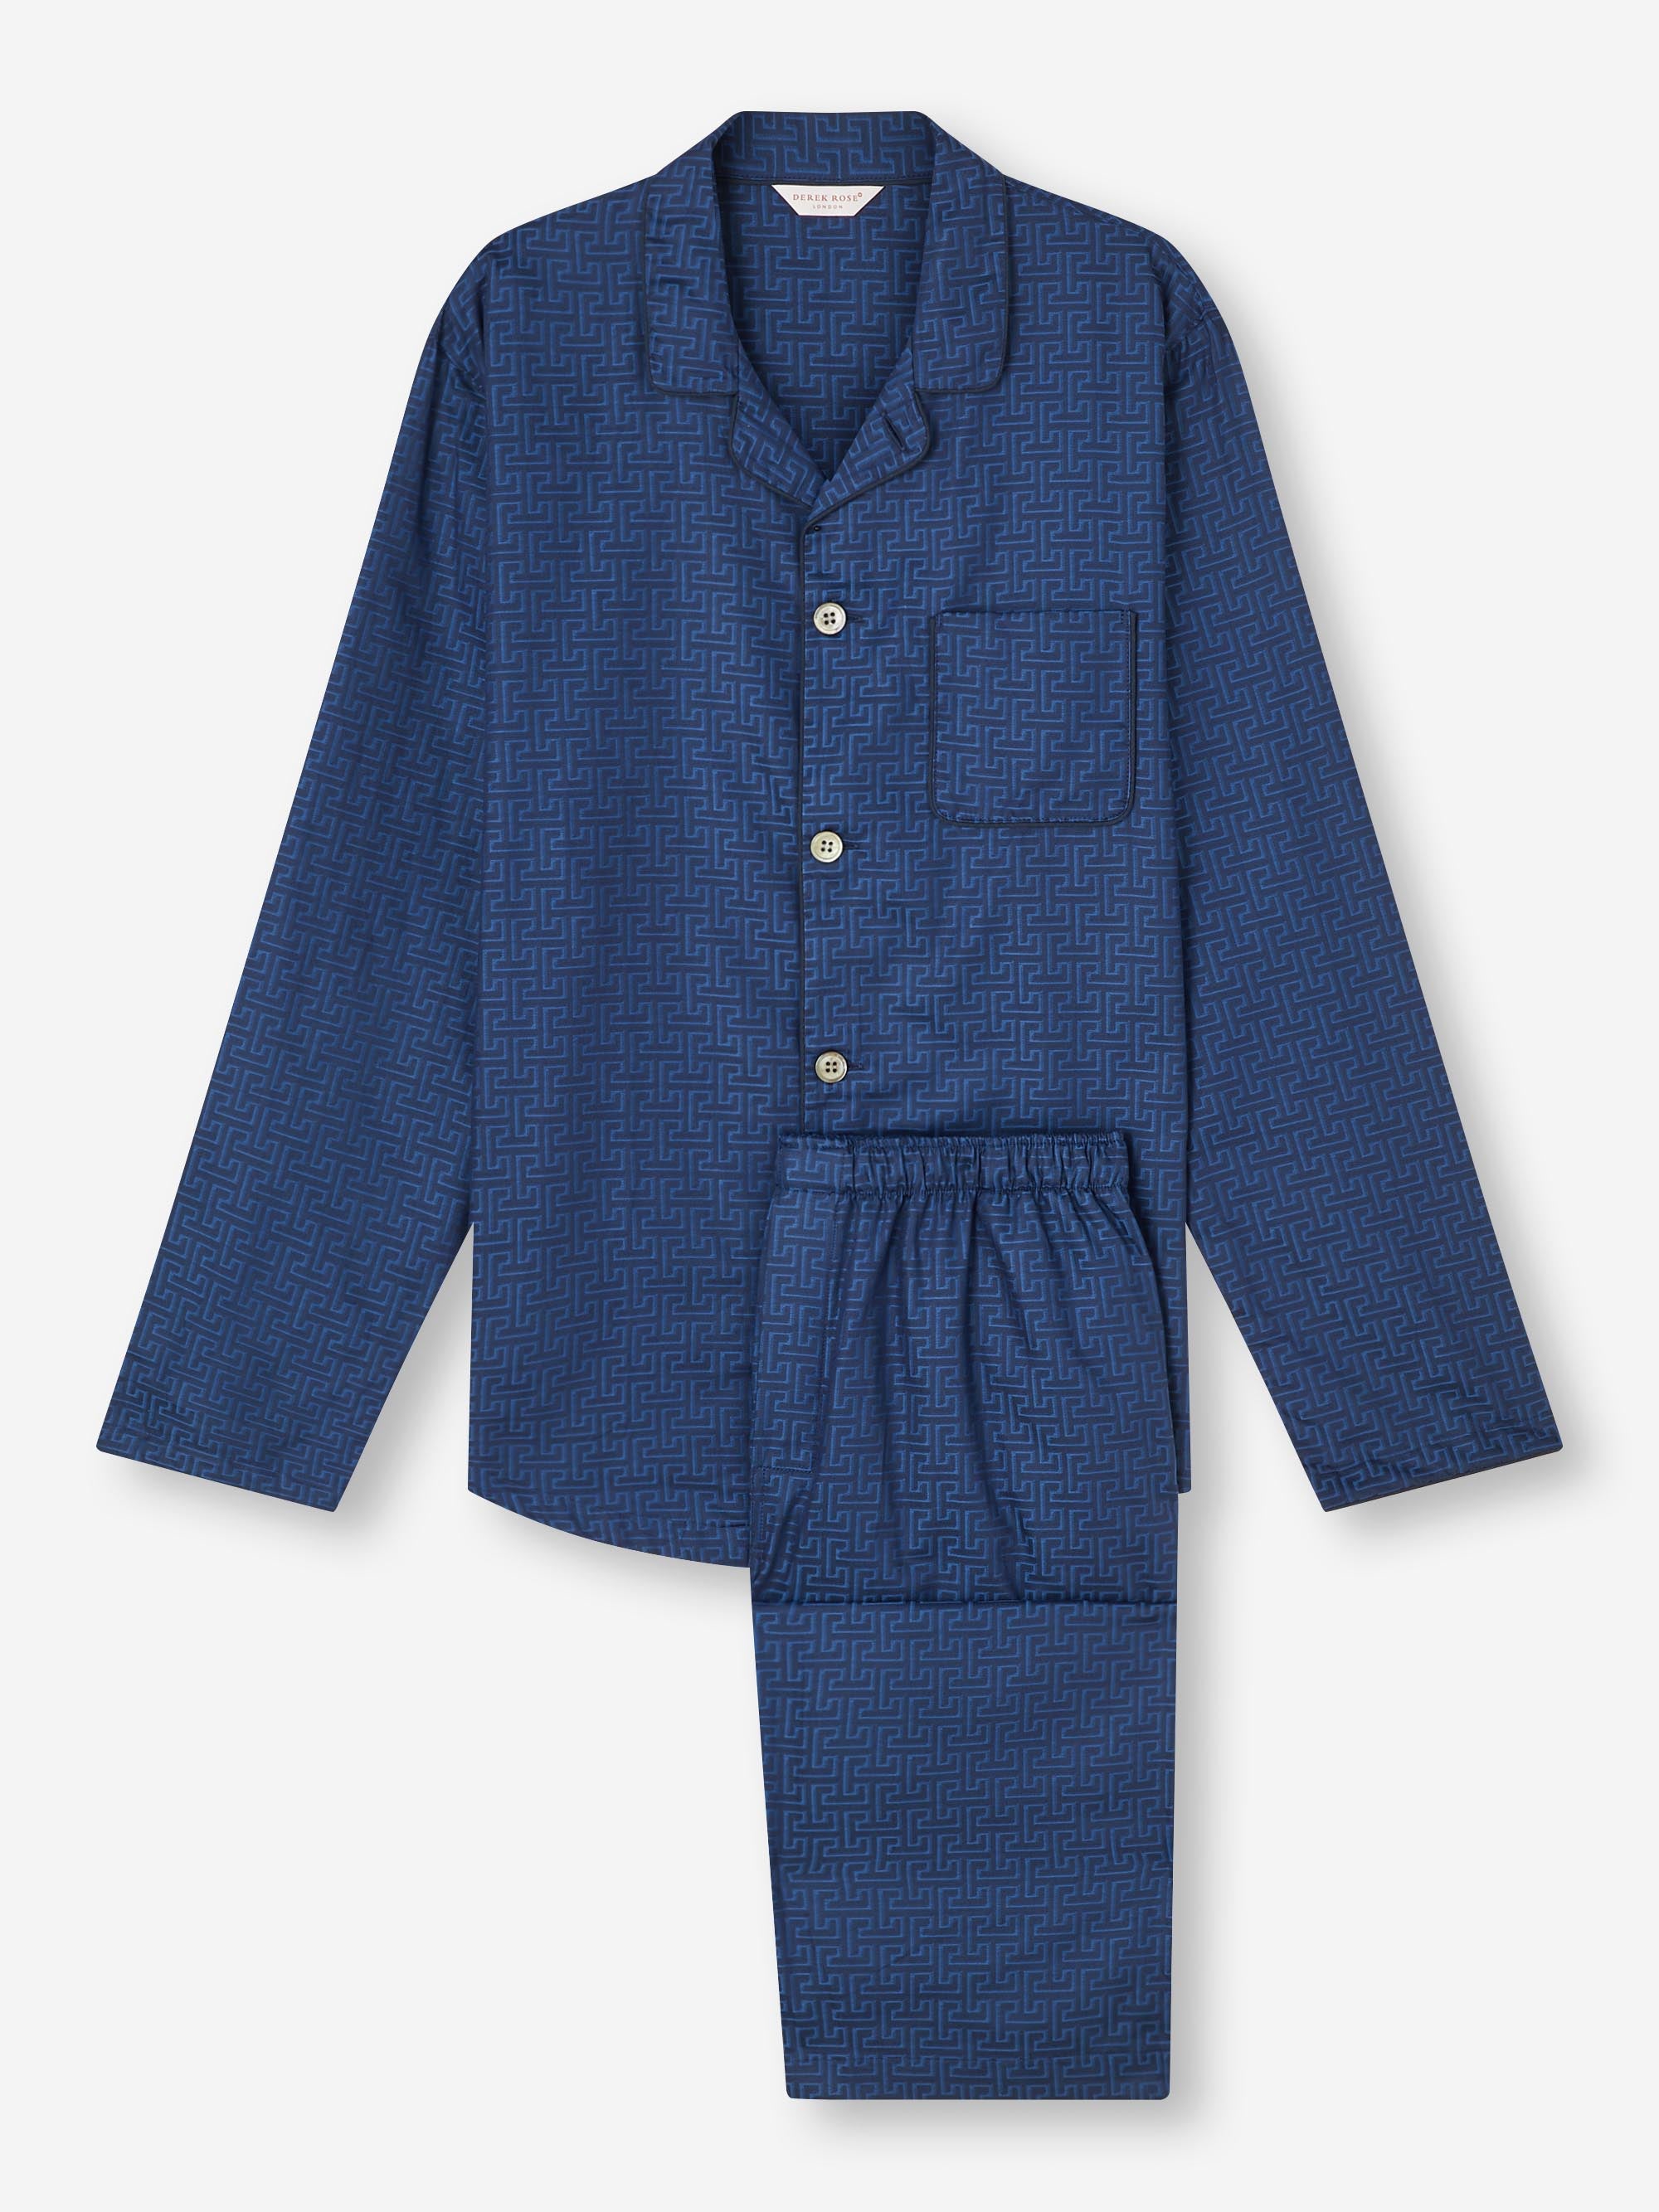 Men's Modern Fit Pyjamas Paris 27 Cotton Jacquard Navy